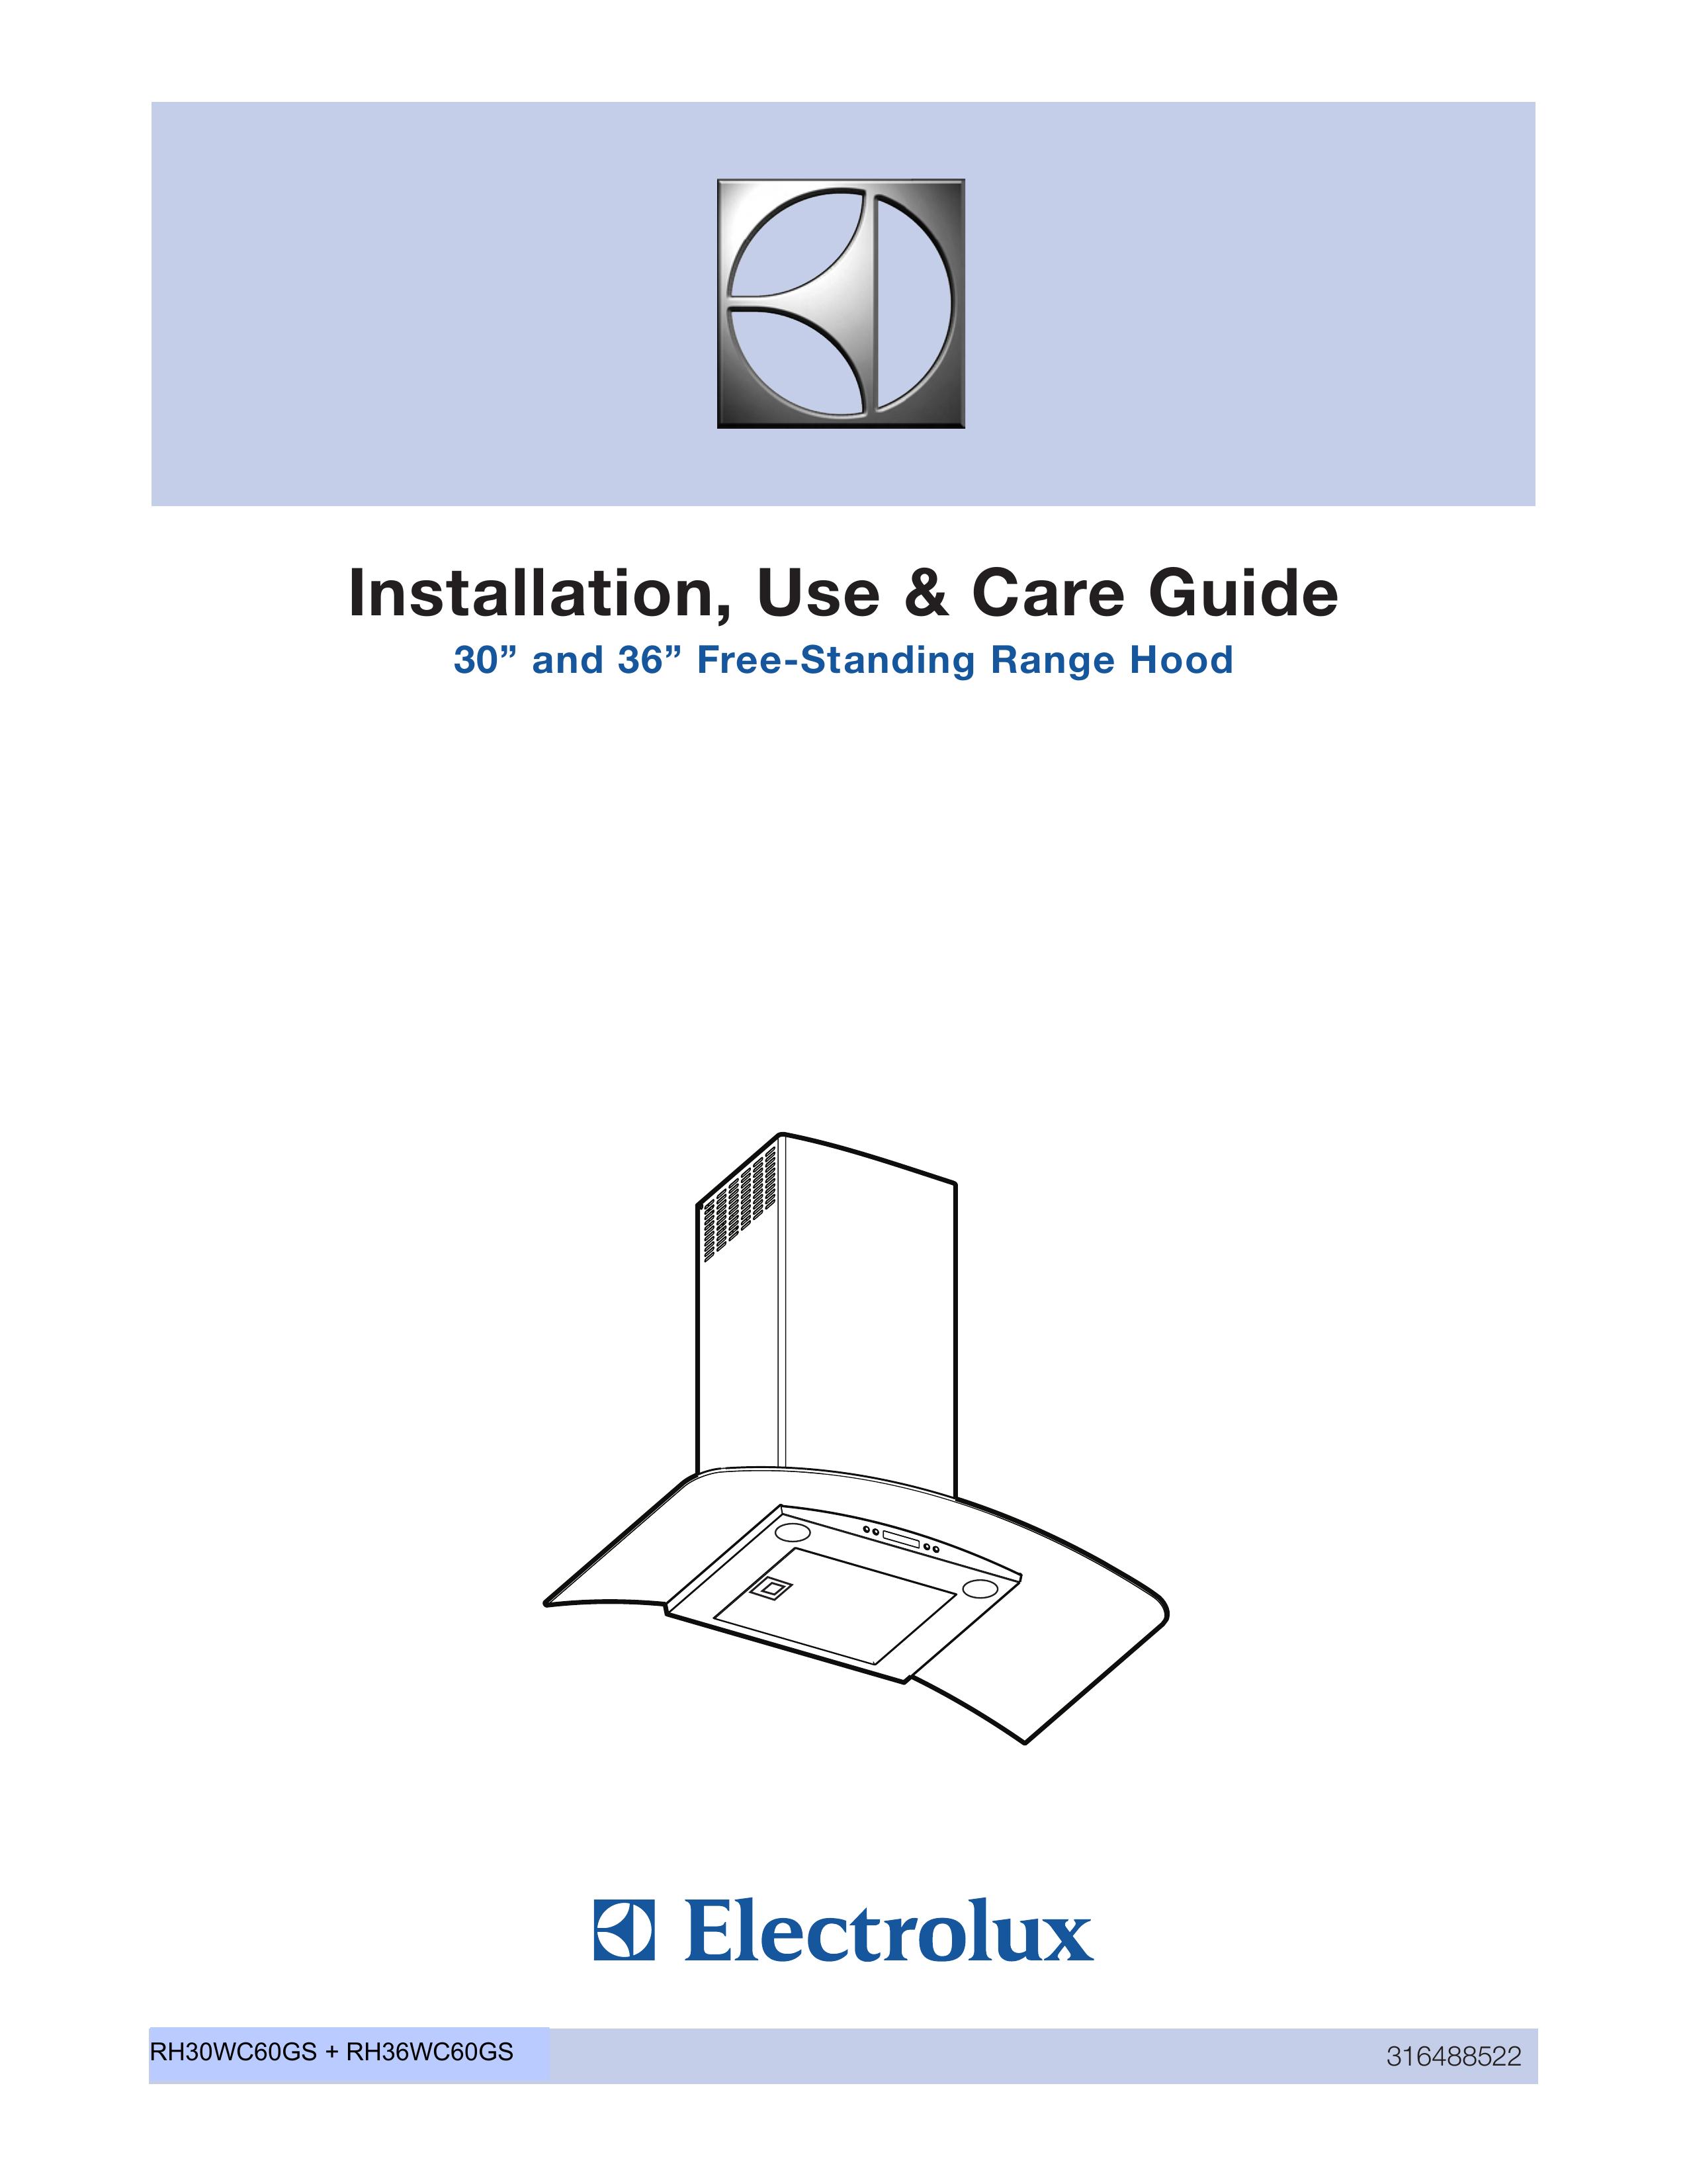 Frigidaire RH30WC60GS Ventilation Hood User Manual